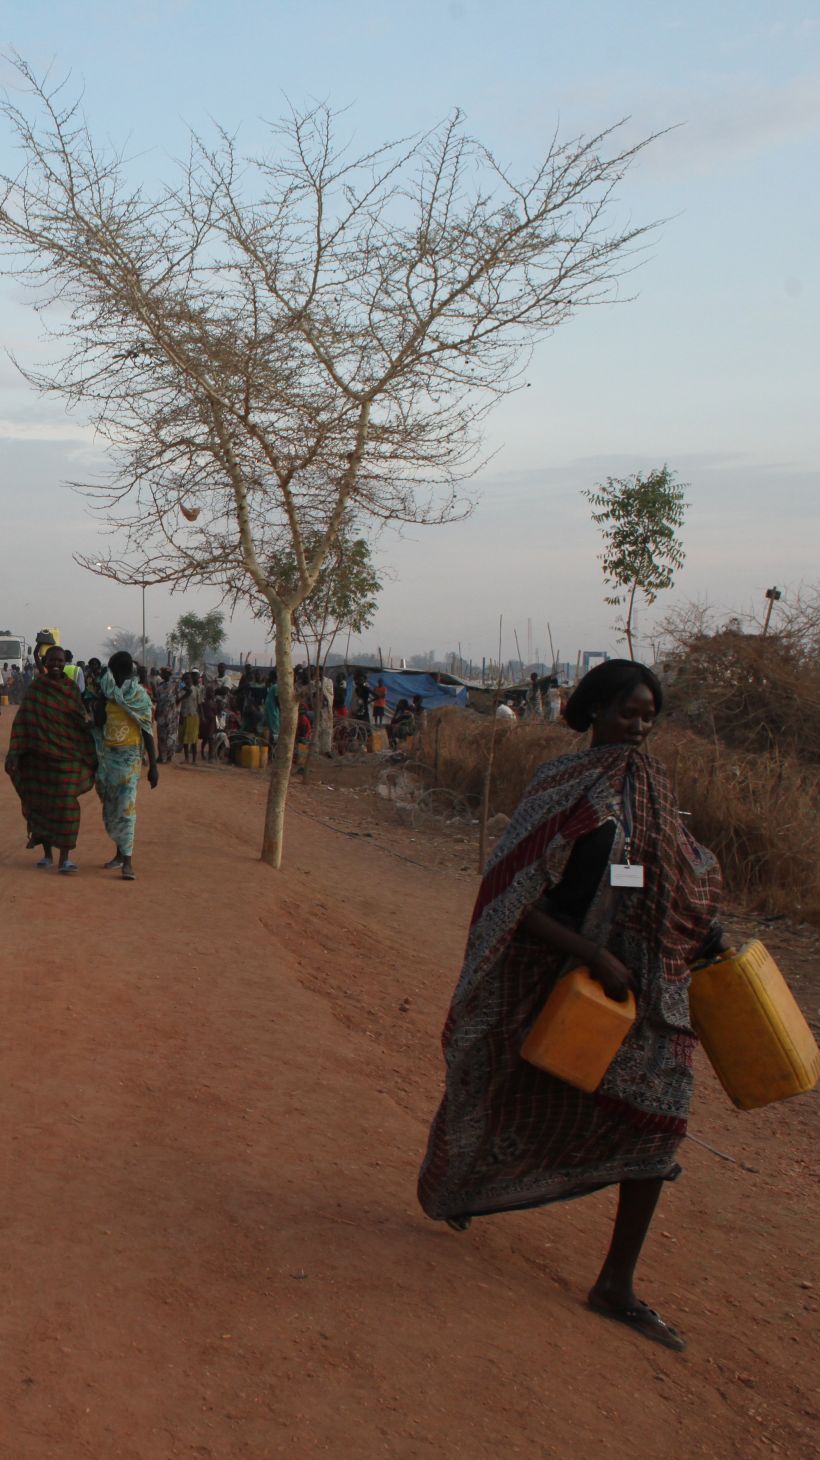 Women walk past a UN tank inside the inside de POC (protection of civilians site) in Malakal, South Sudan, on March 3rd, 2014